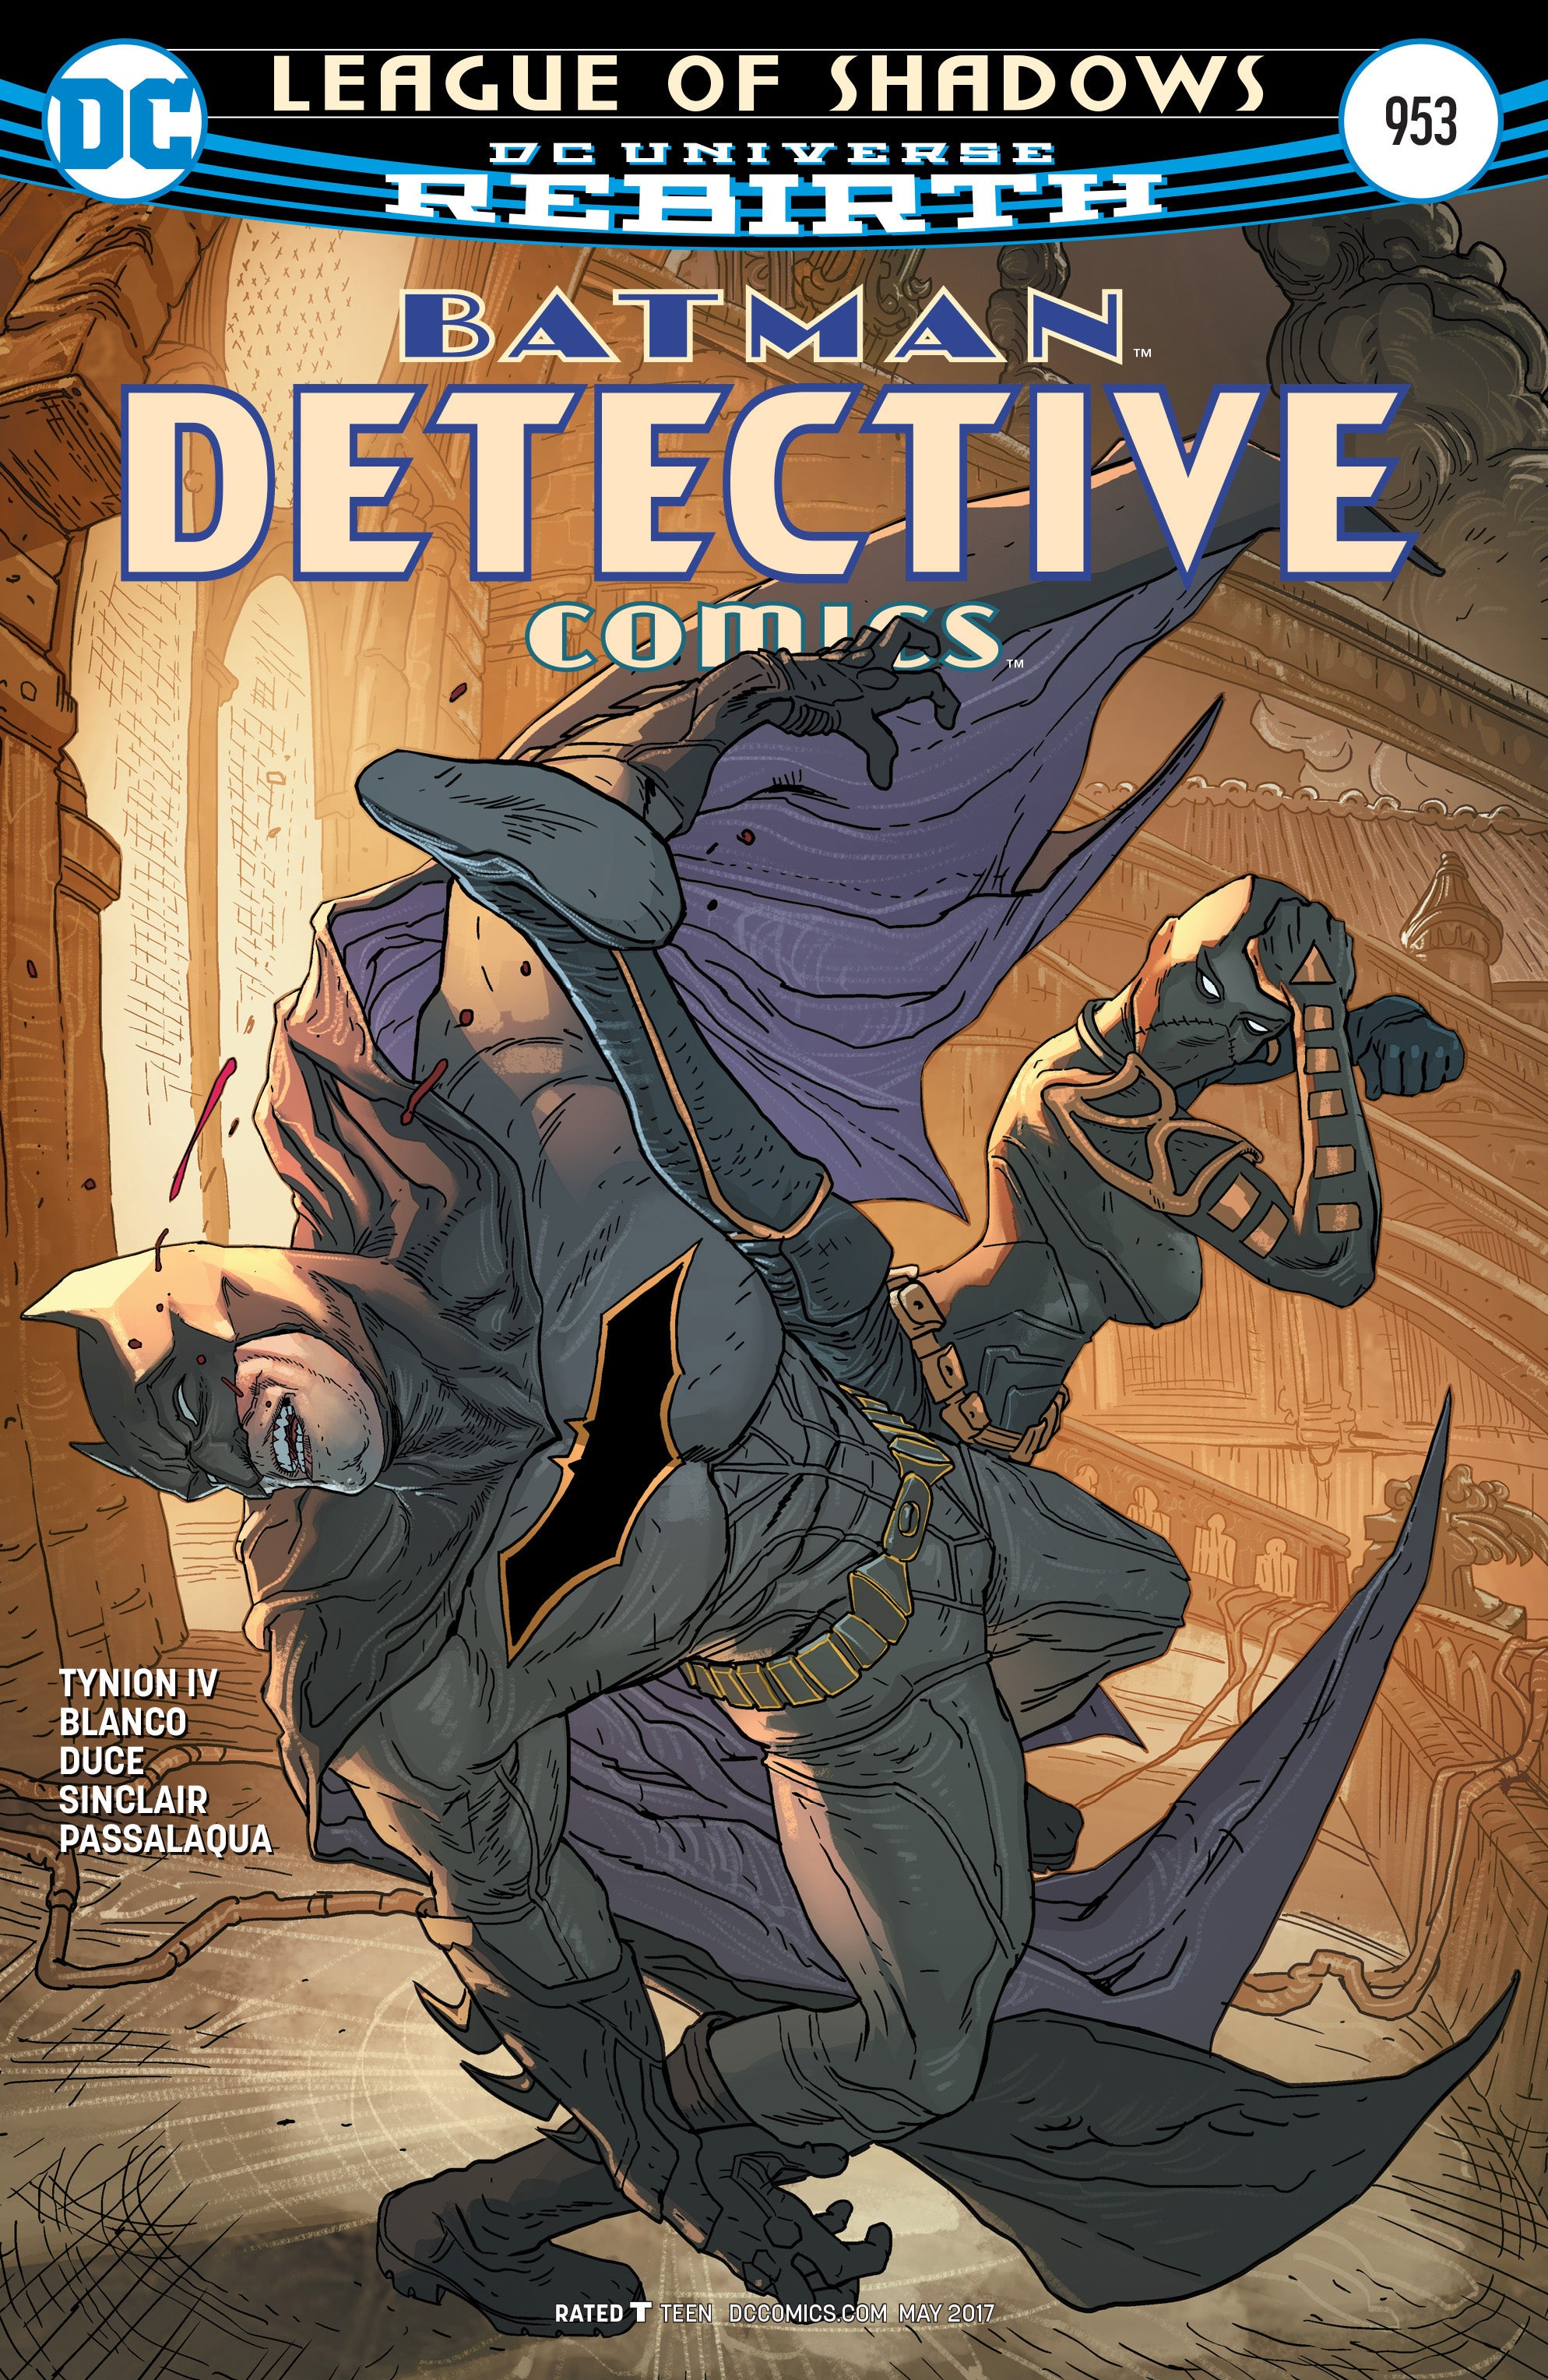 DETECTIVE COMICS #953 | Game Master's Emporium (The New GME)